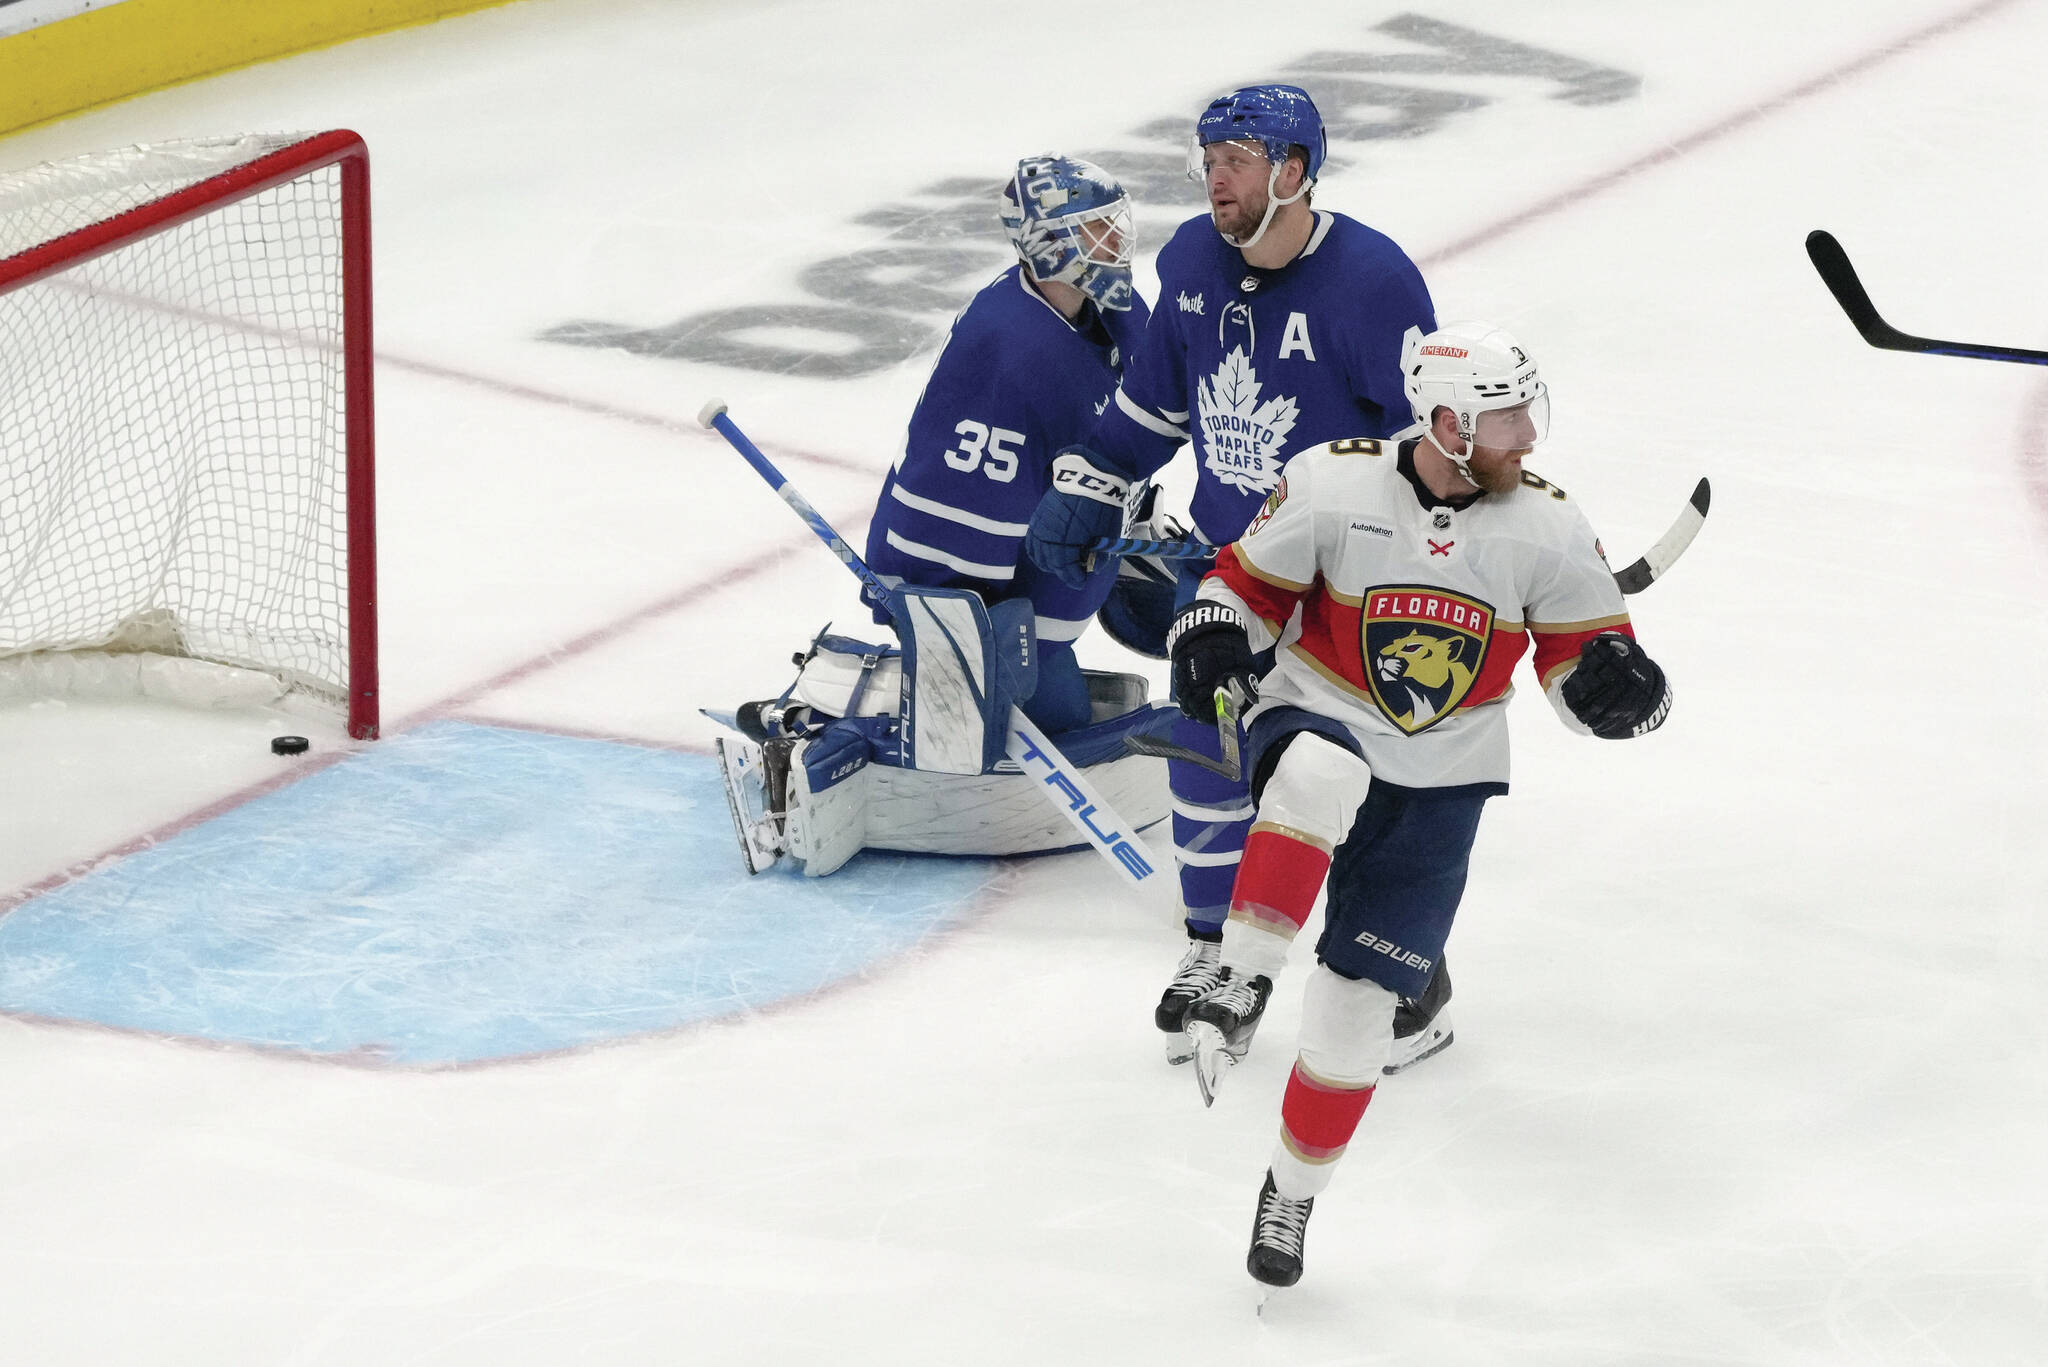 Leafs, Ilya Samsonov may look back at this week as a win-win